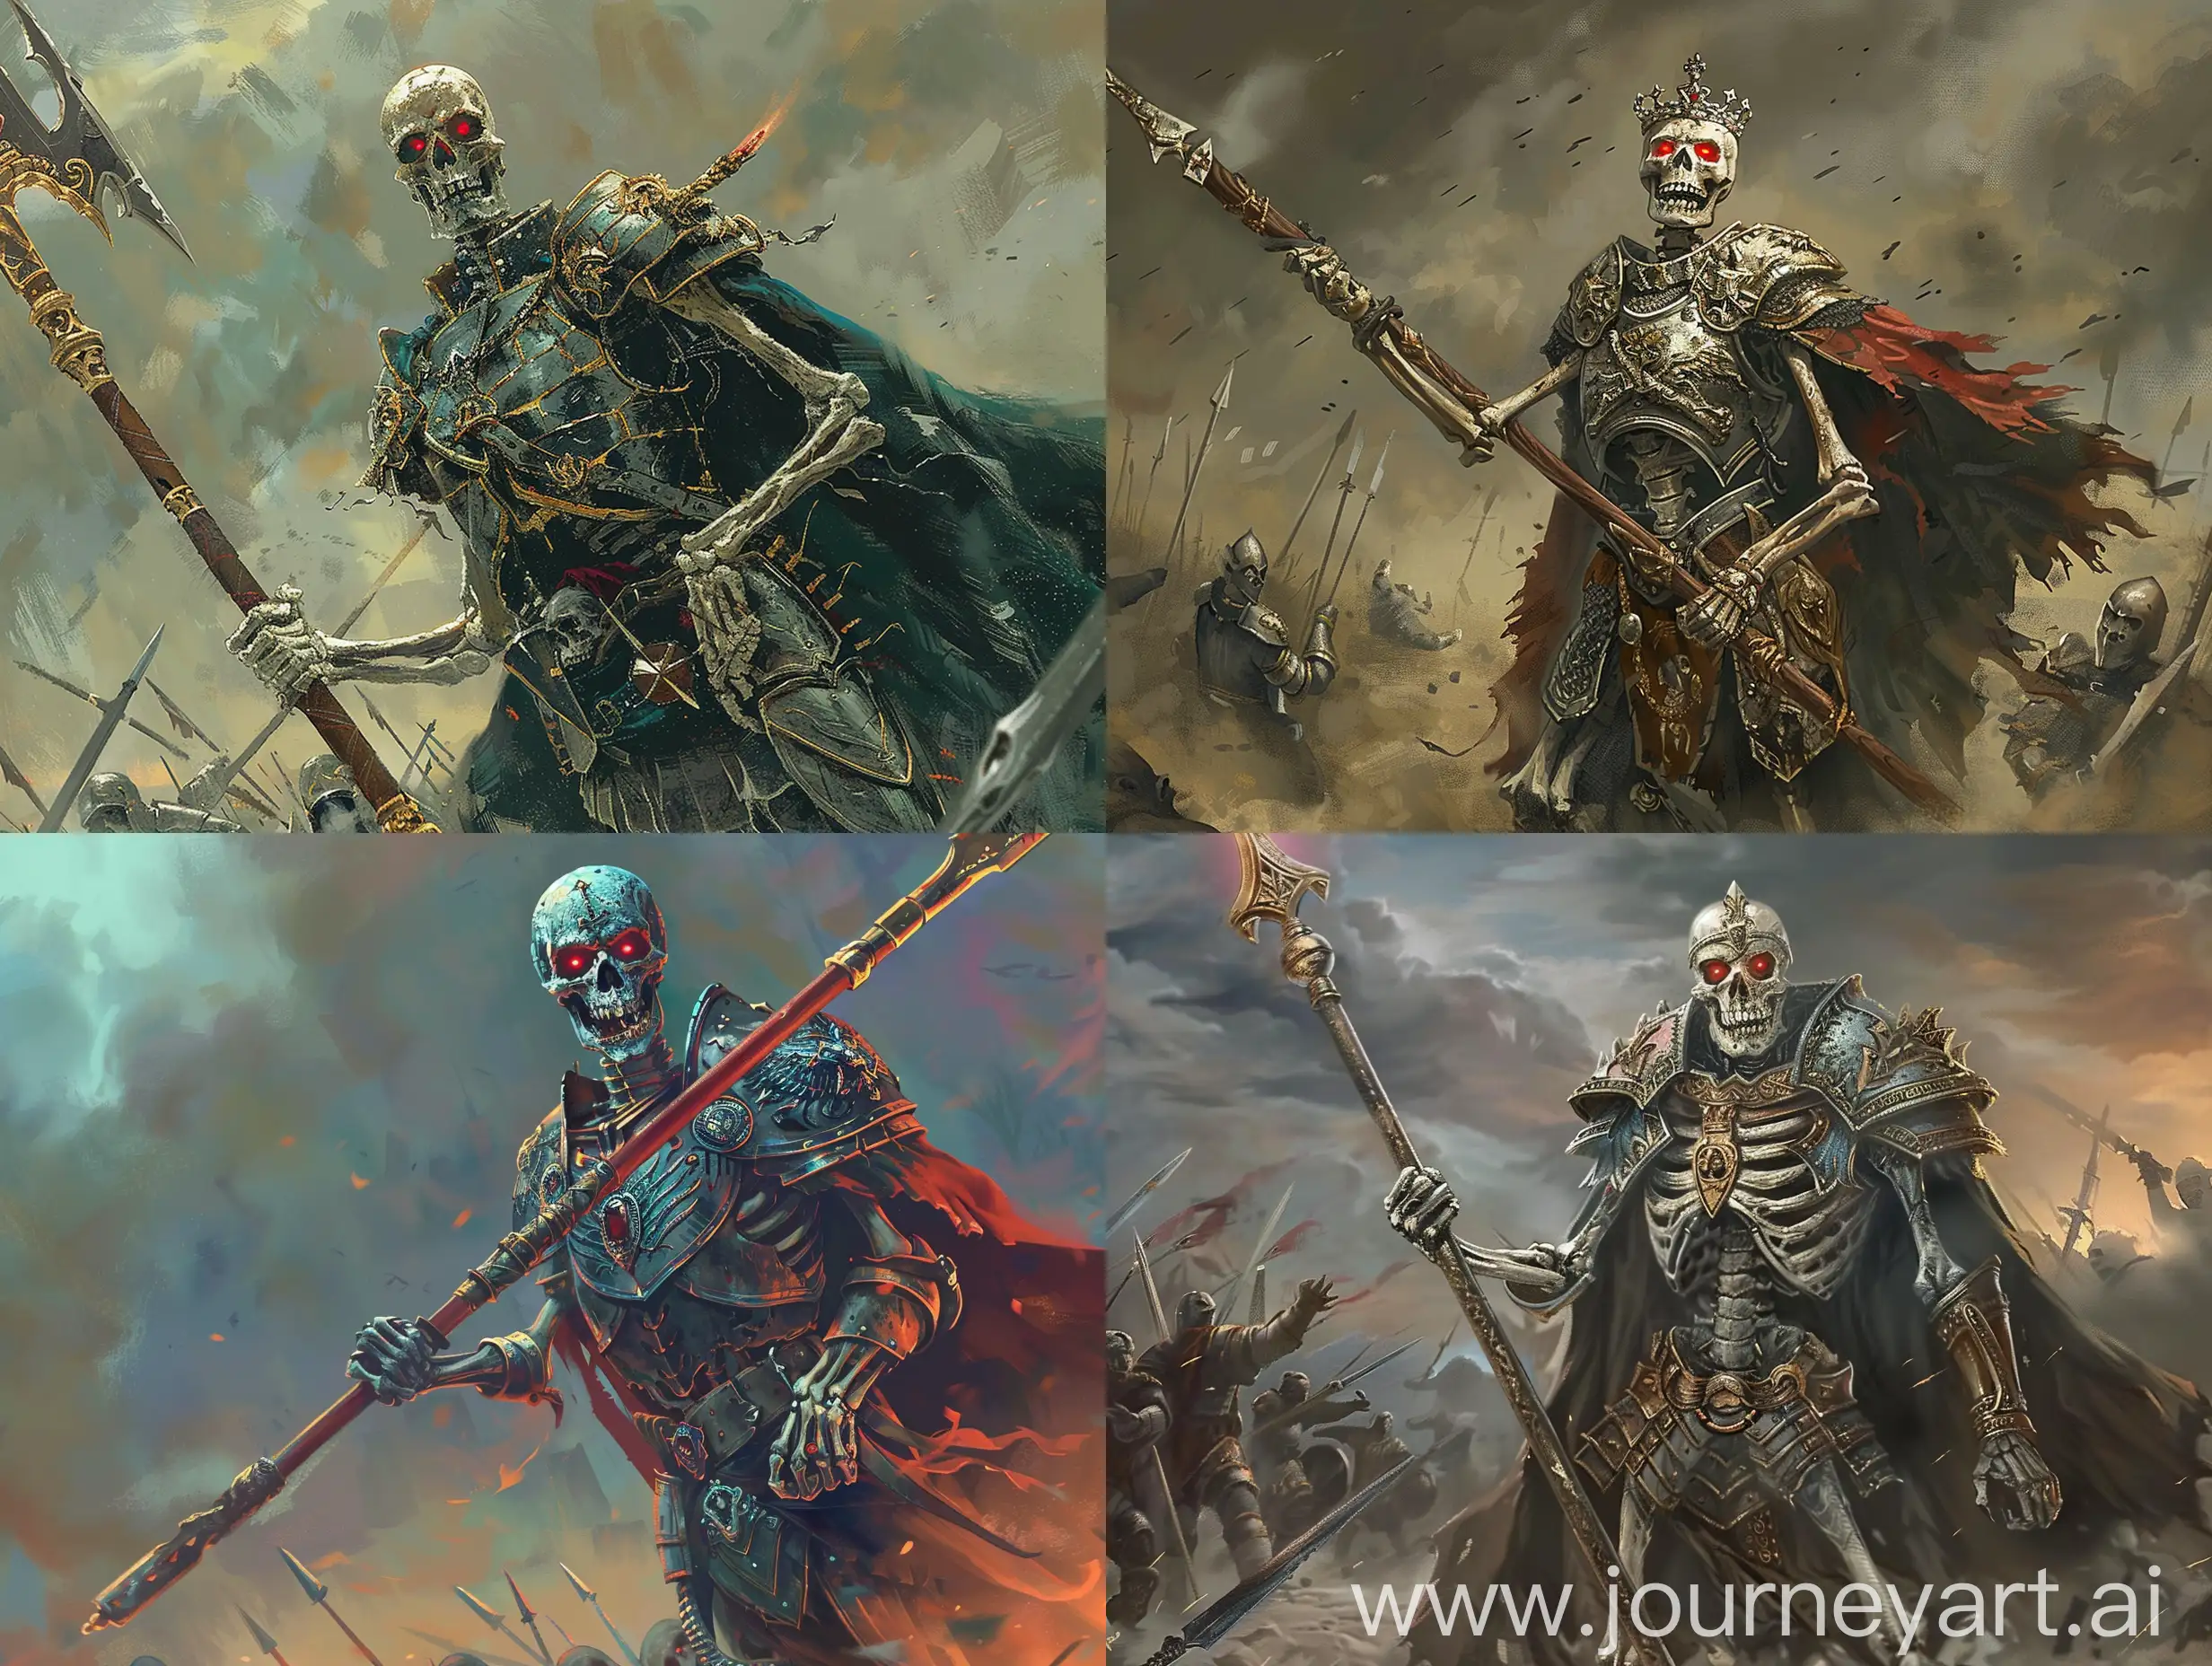 Majestic-Skeleton-King-in-Armor-with-Legendary-Spear-on-Battleground